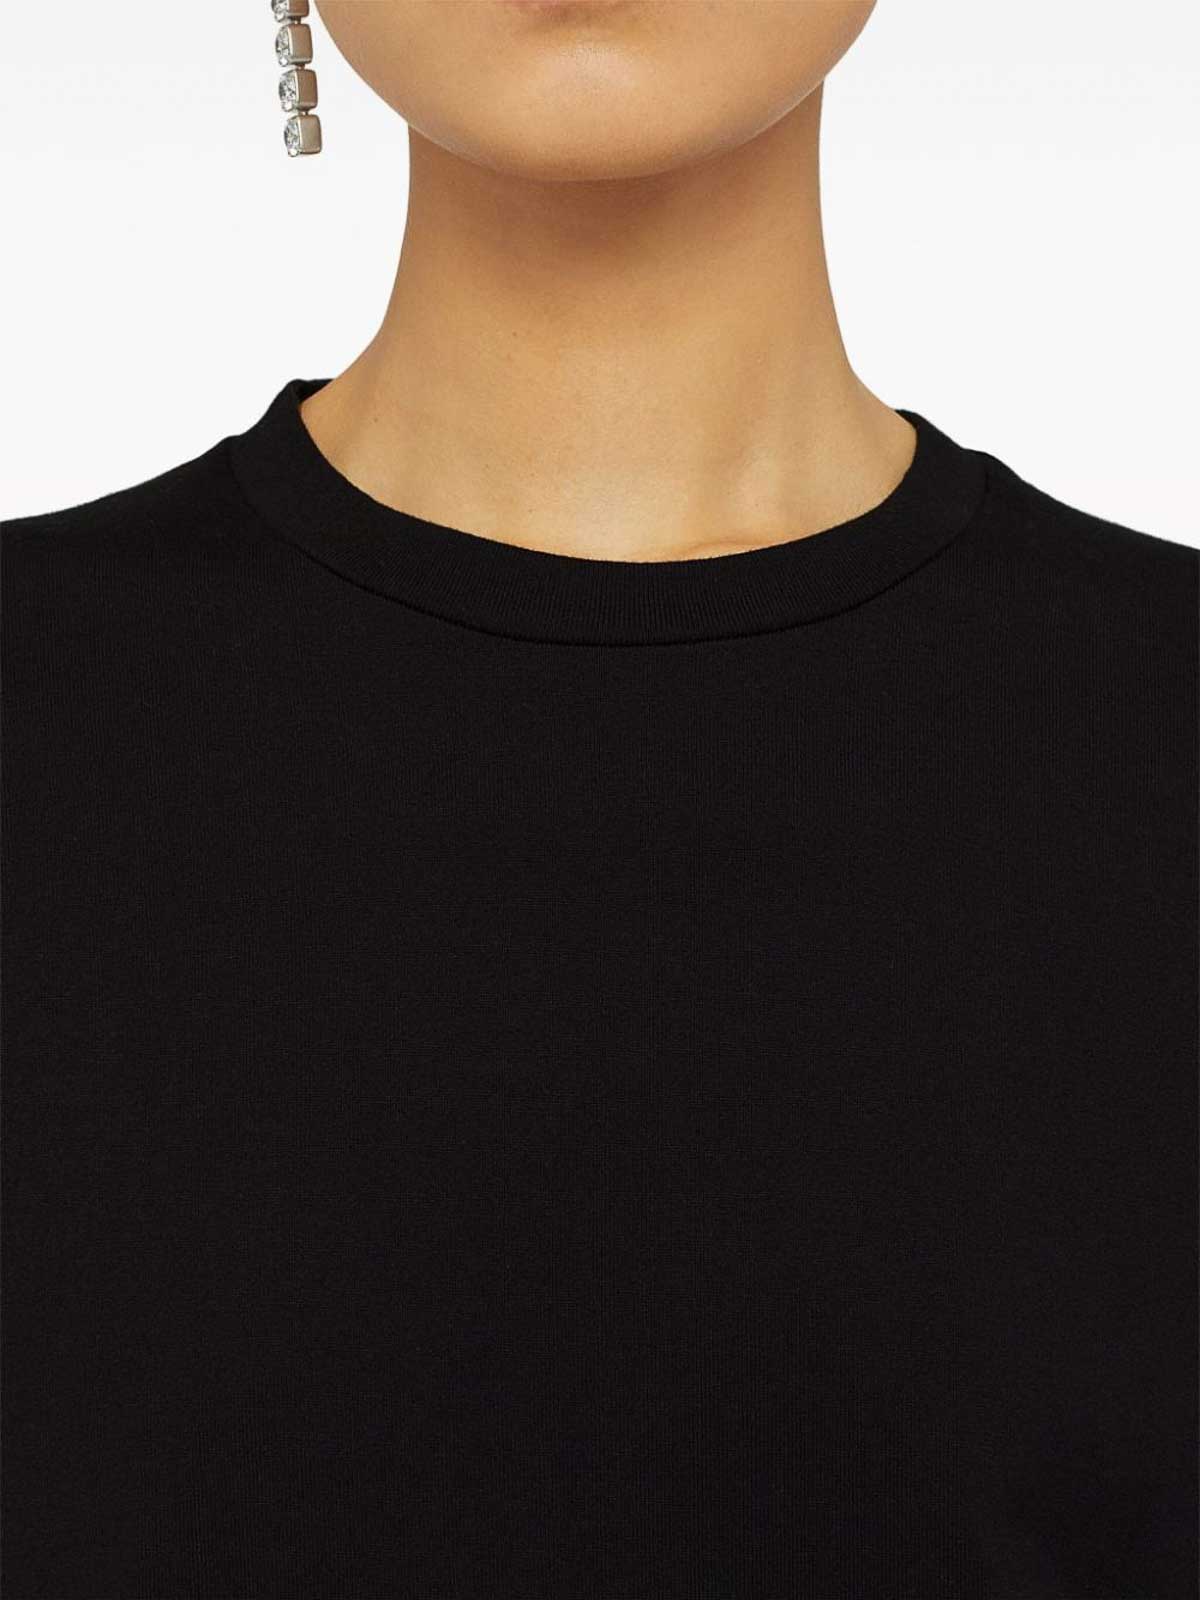 Shop Jil Sander T-shirt With Writing In Black